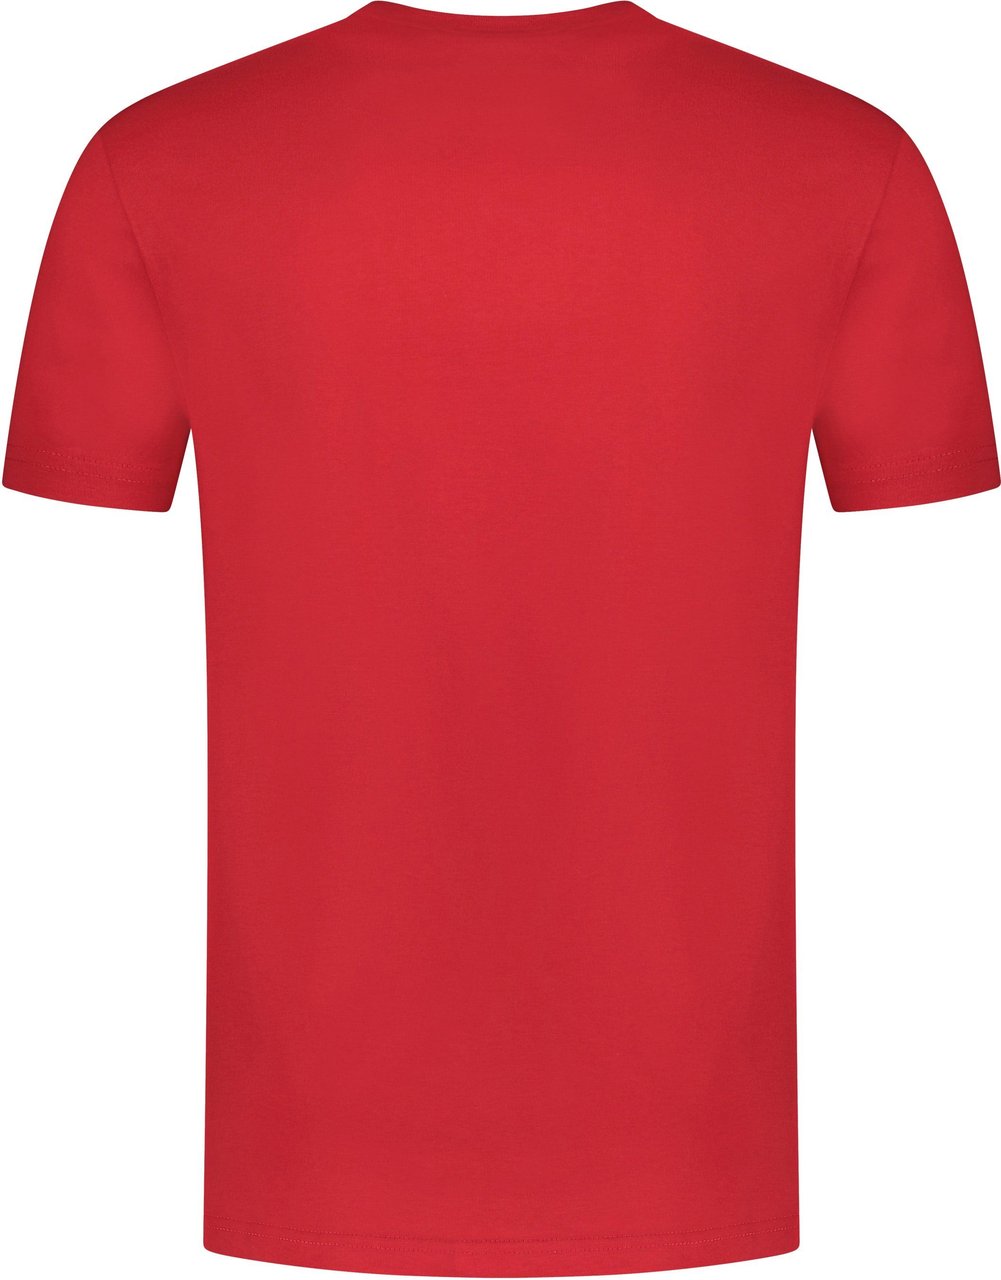 Lyle & Scott T-shirt Rood Rood